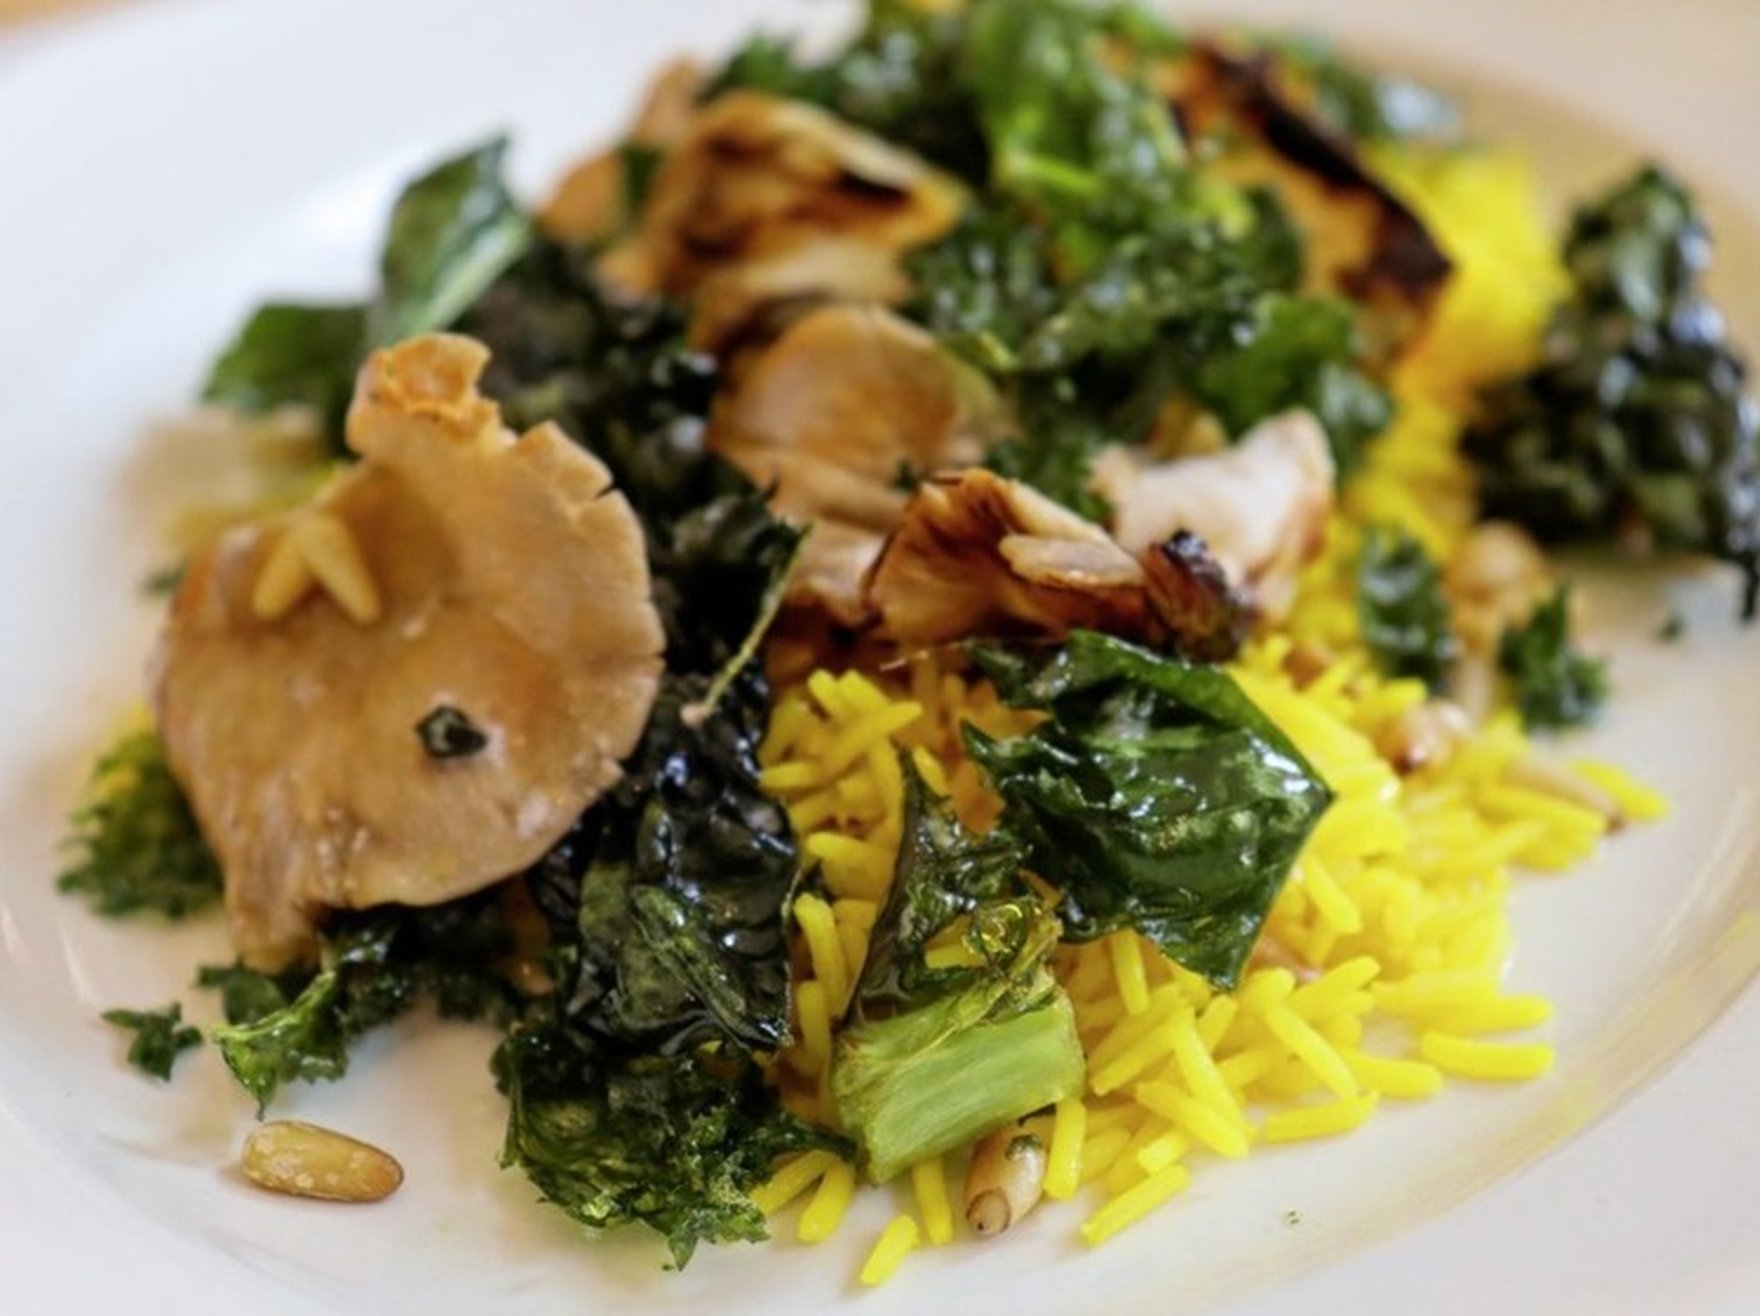 James St recipes: Speedy summer salads – Panzanella salad and Crispy Kale, Mushroom and Rice salad